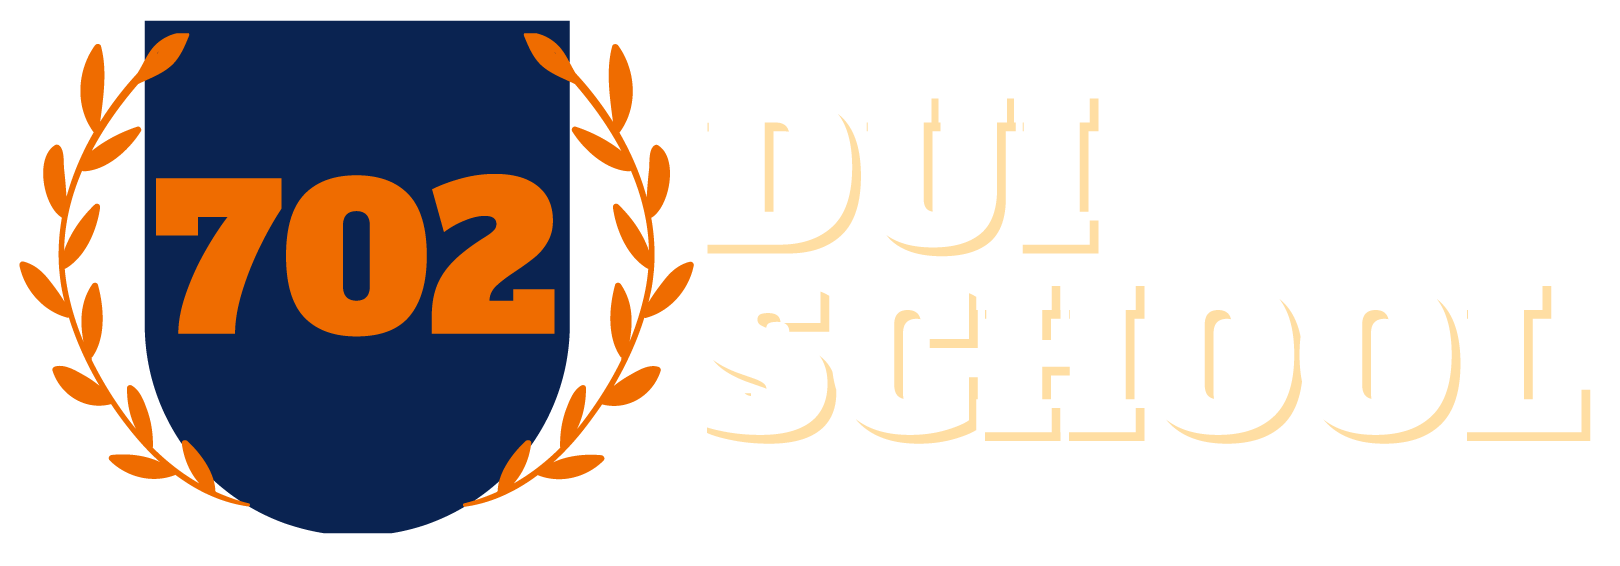 702 DUI School